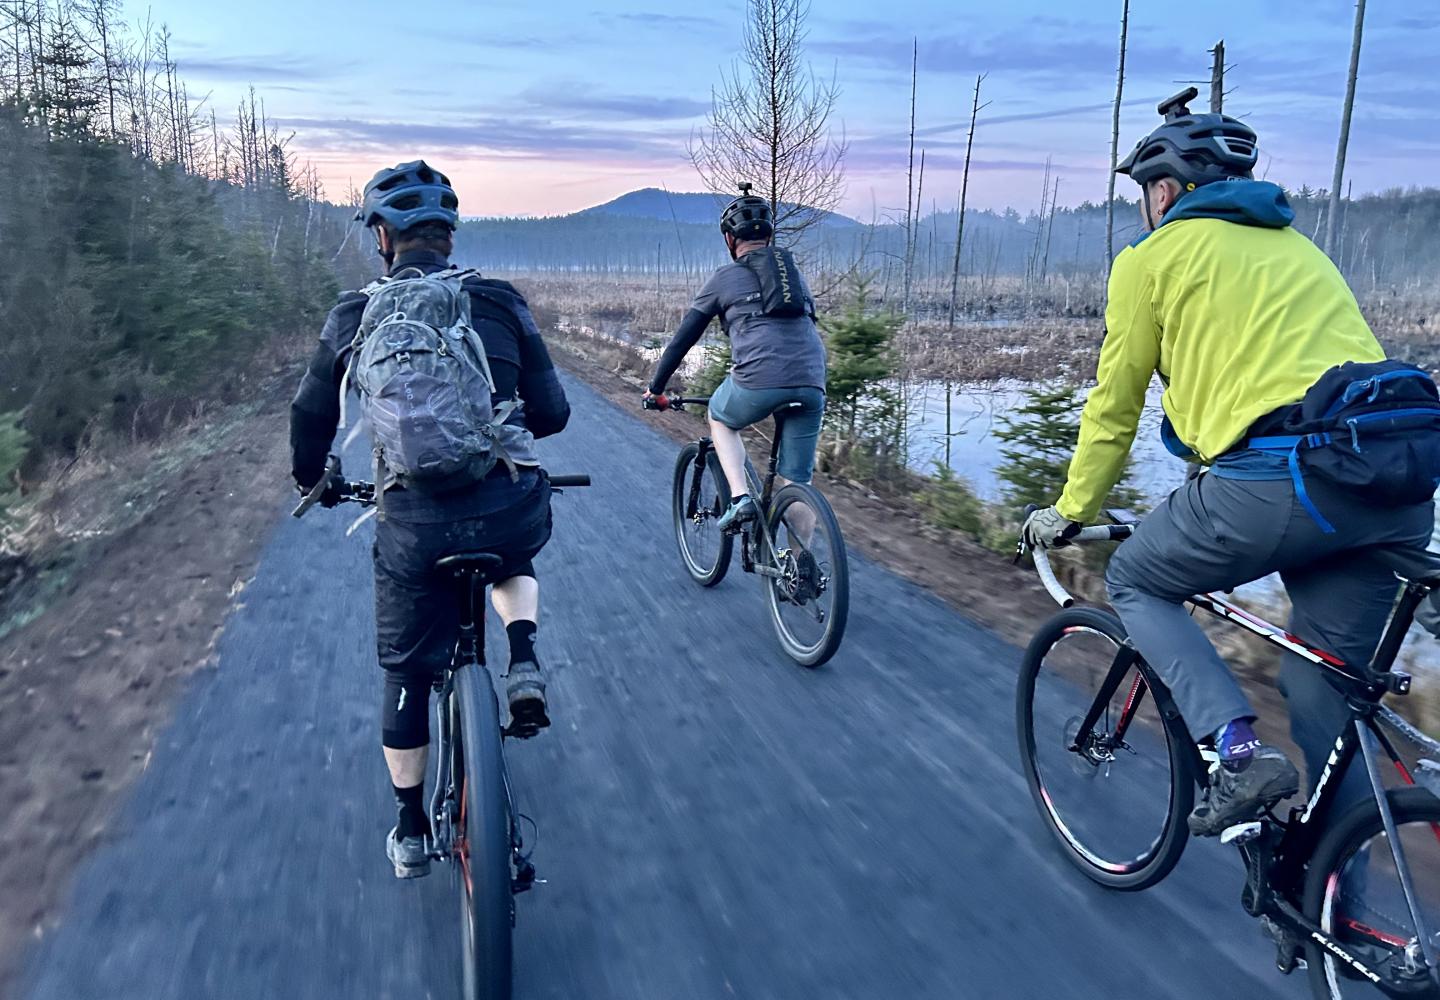 Cyclists enjoy Phase 1 of the Adirondack Rail Trail